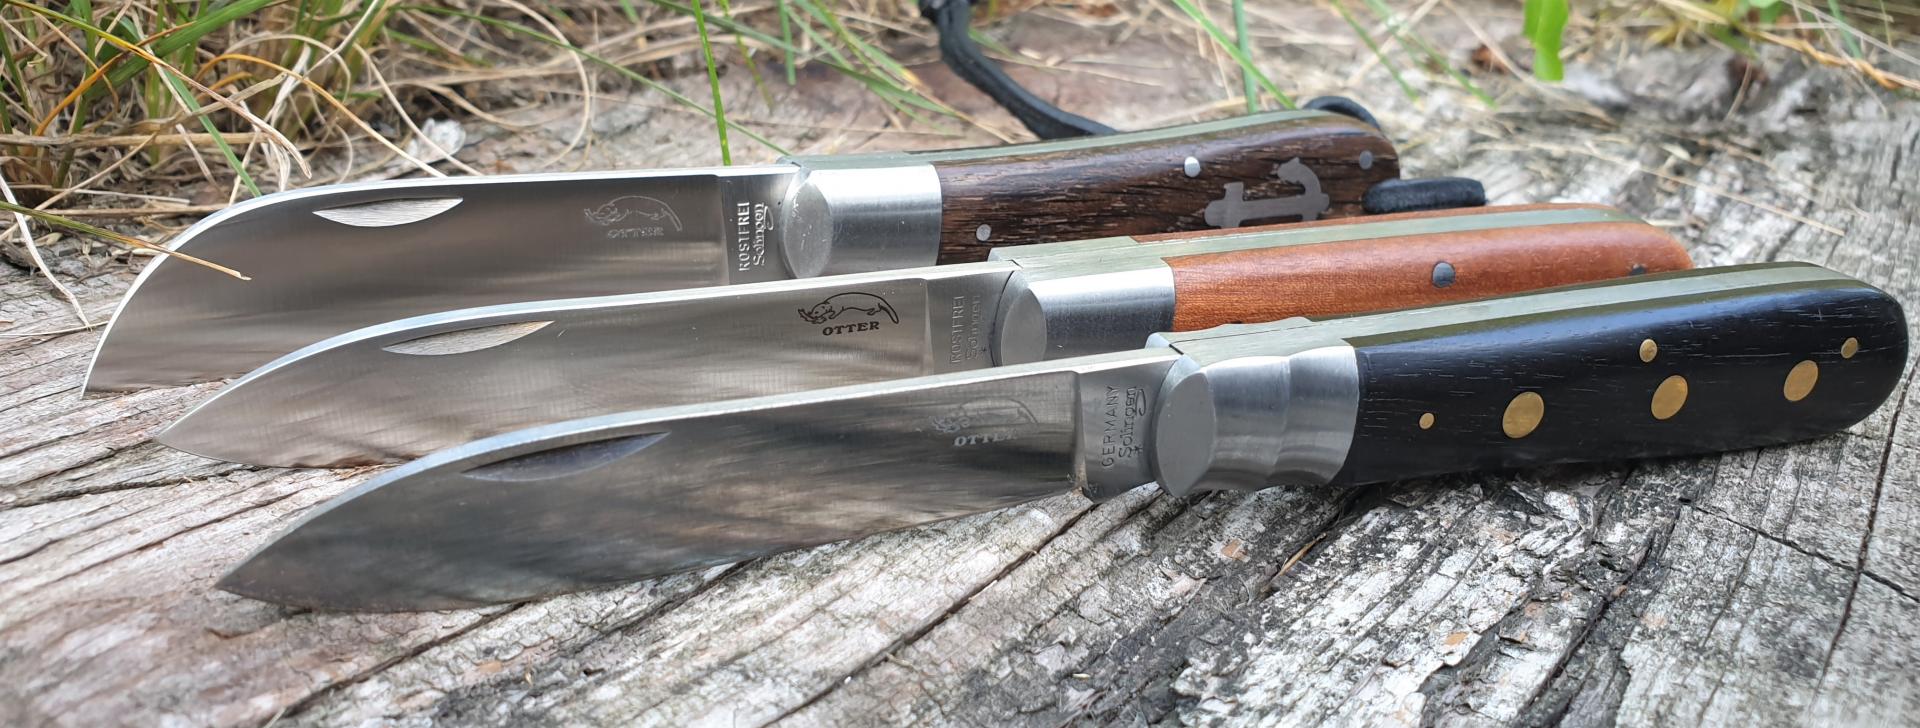 Otter knives from Solingen - European Blades